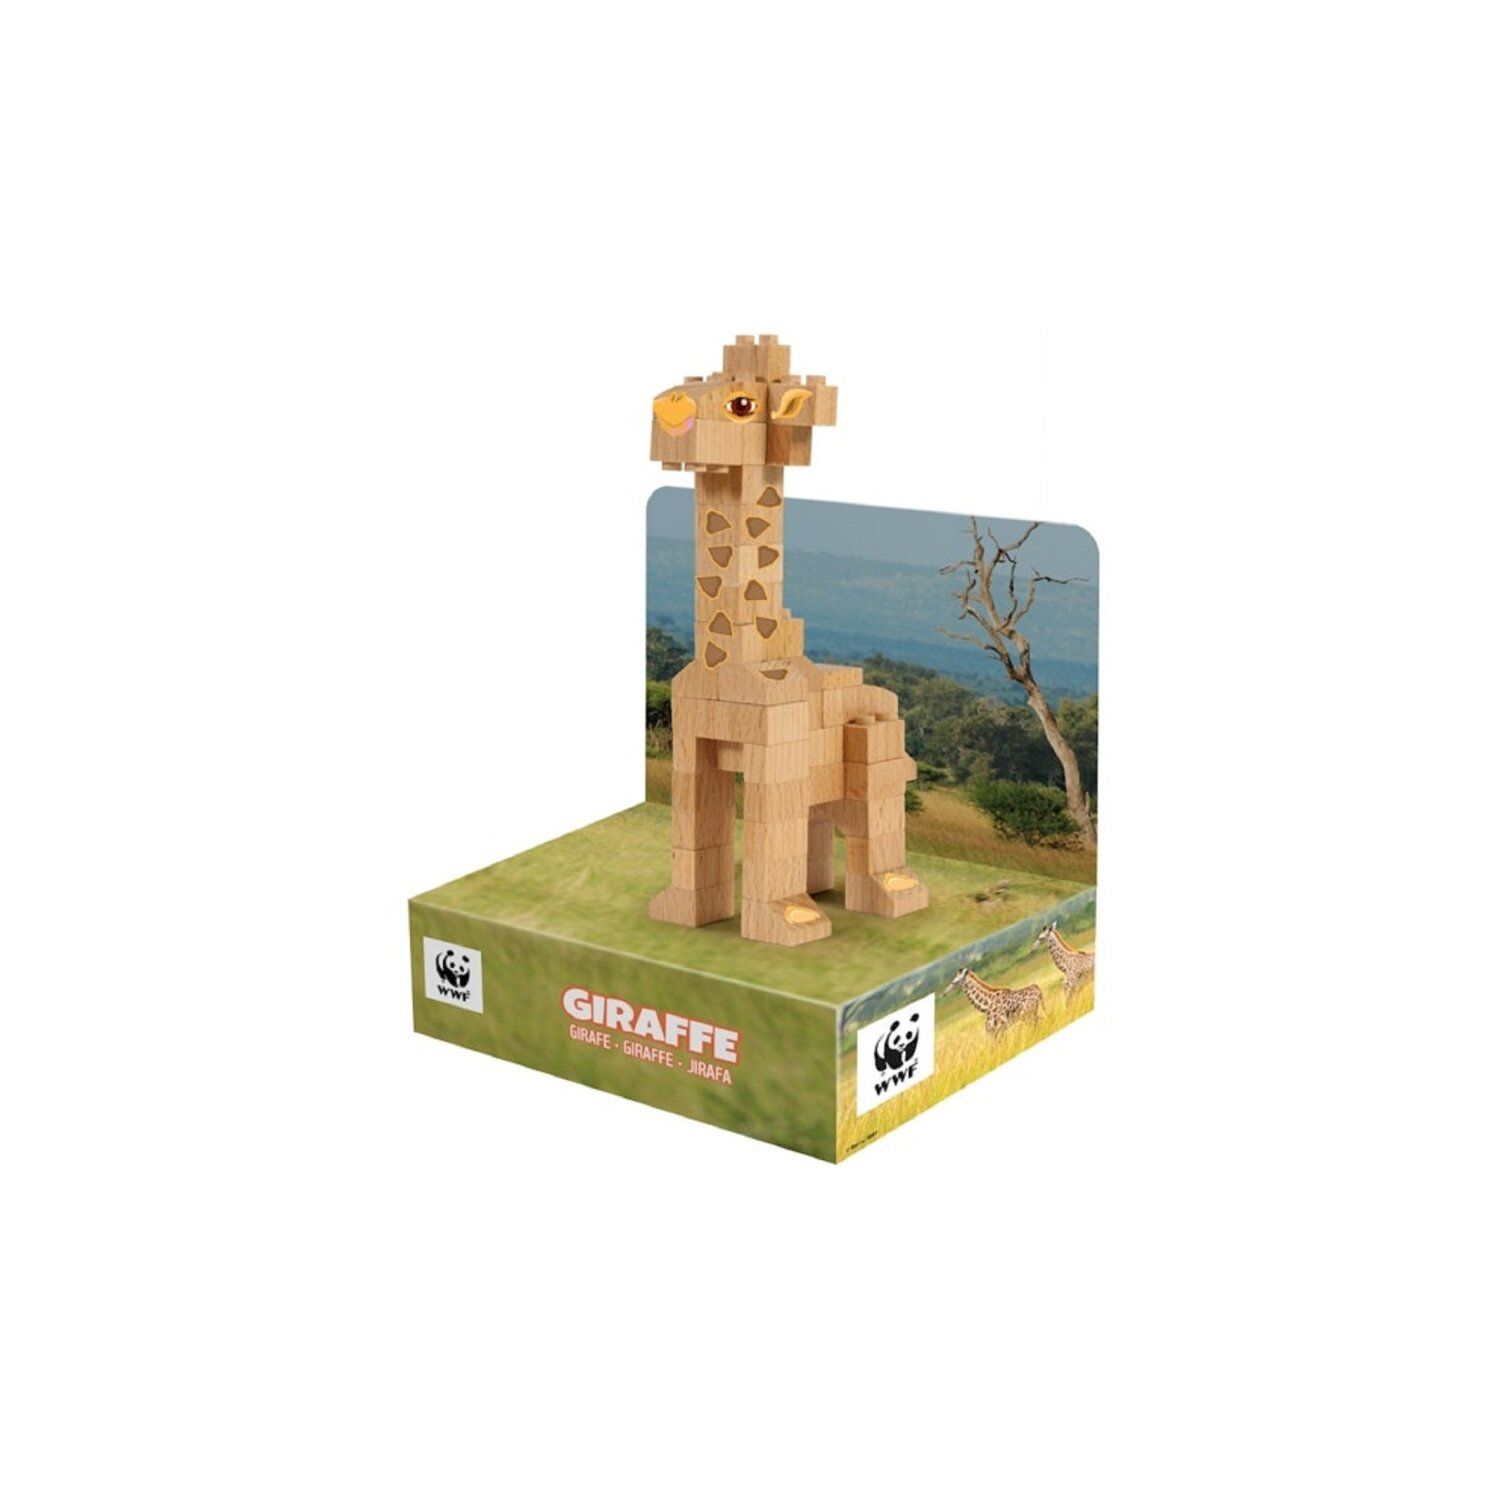 COFI FabBrix Wooden Bausteine WWF Giraffe Bricks